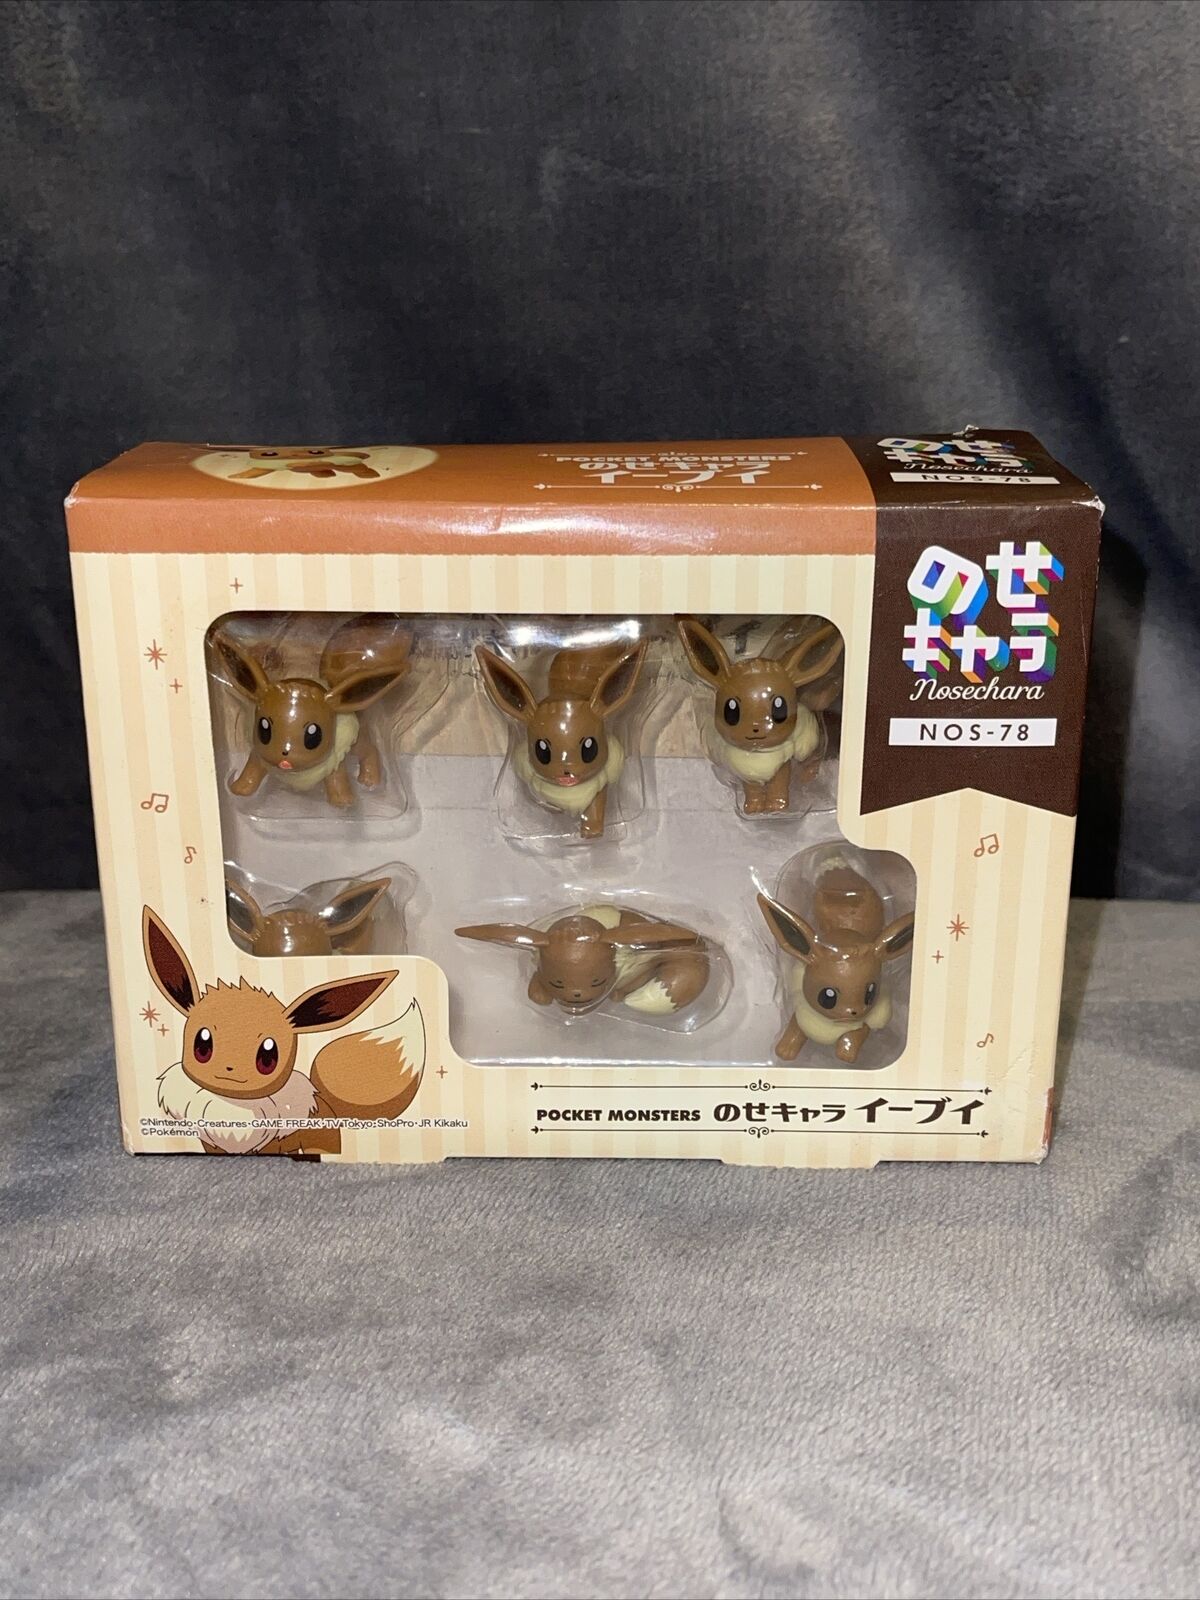 Ensky Pokemon NOS-78 Eevee Nosechara Figure Japan Import USA Seller